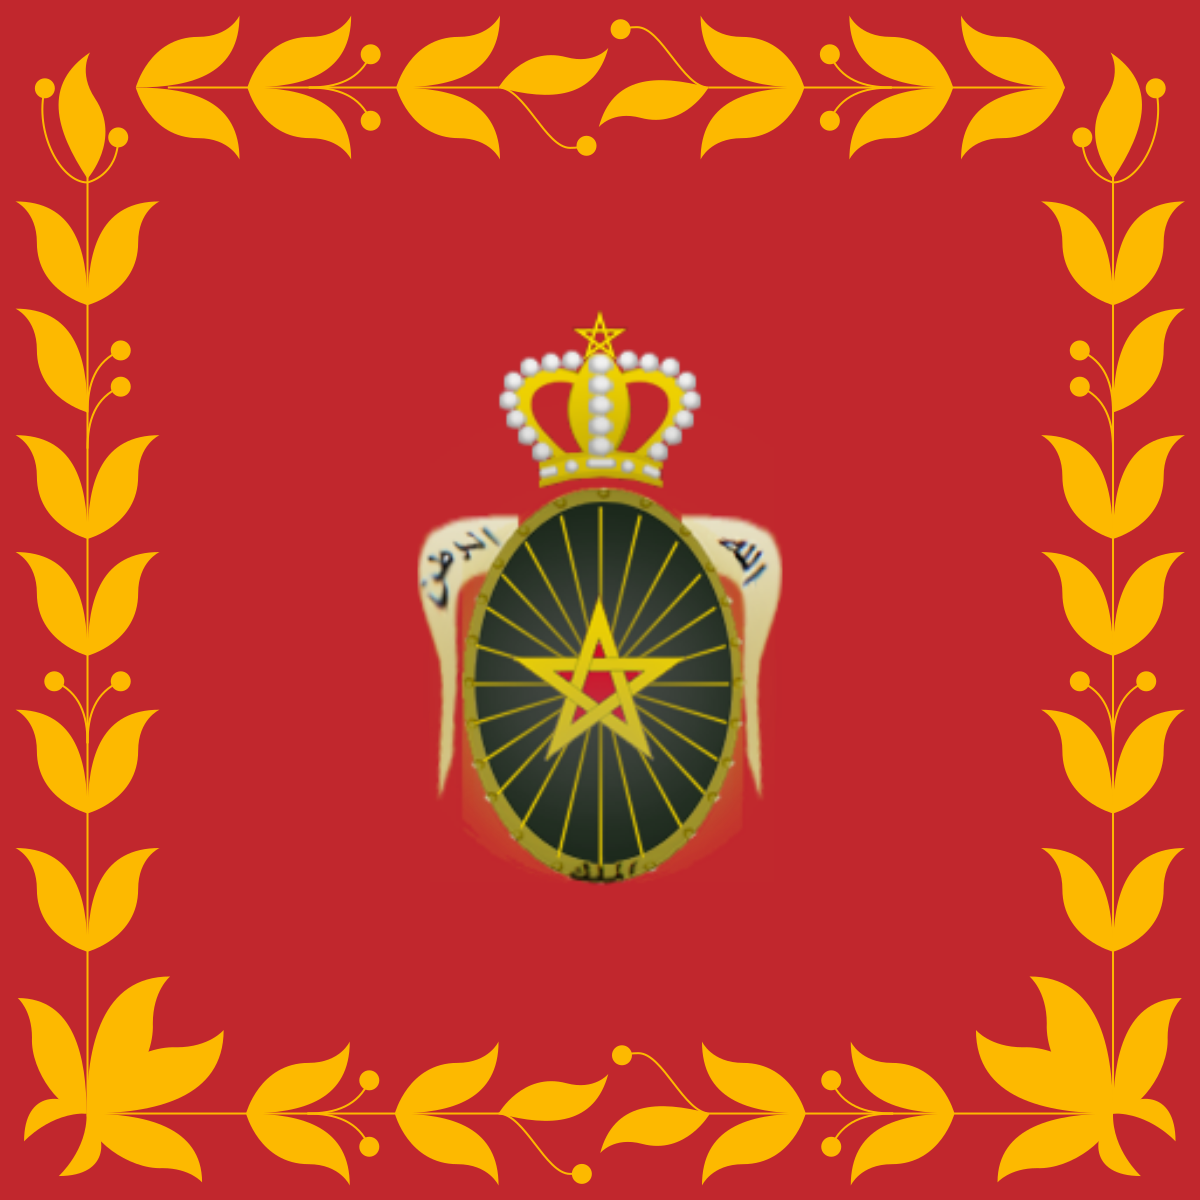 Royal Moroccan Army - Wikipedia